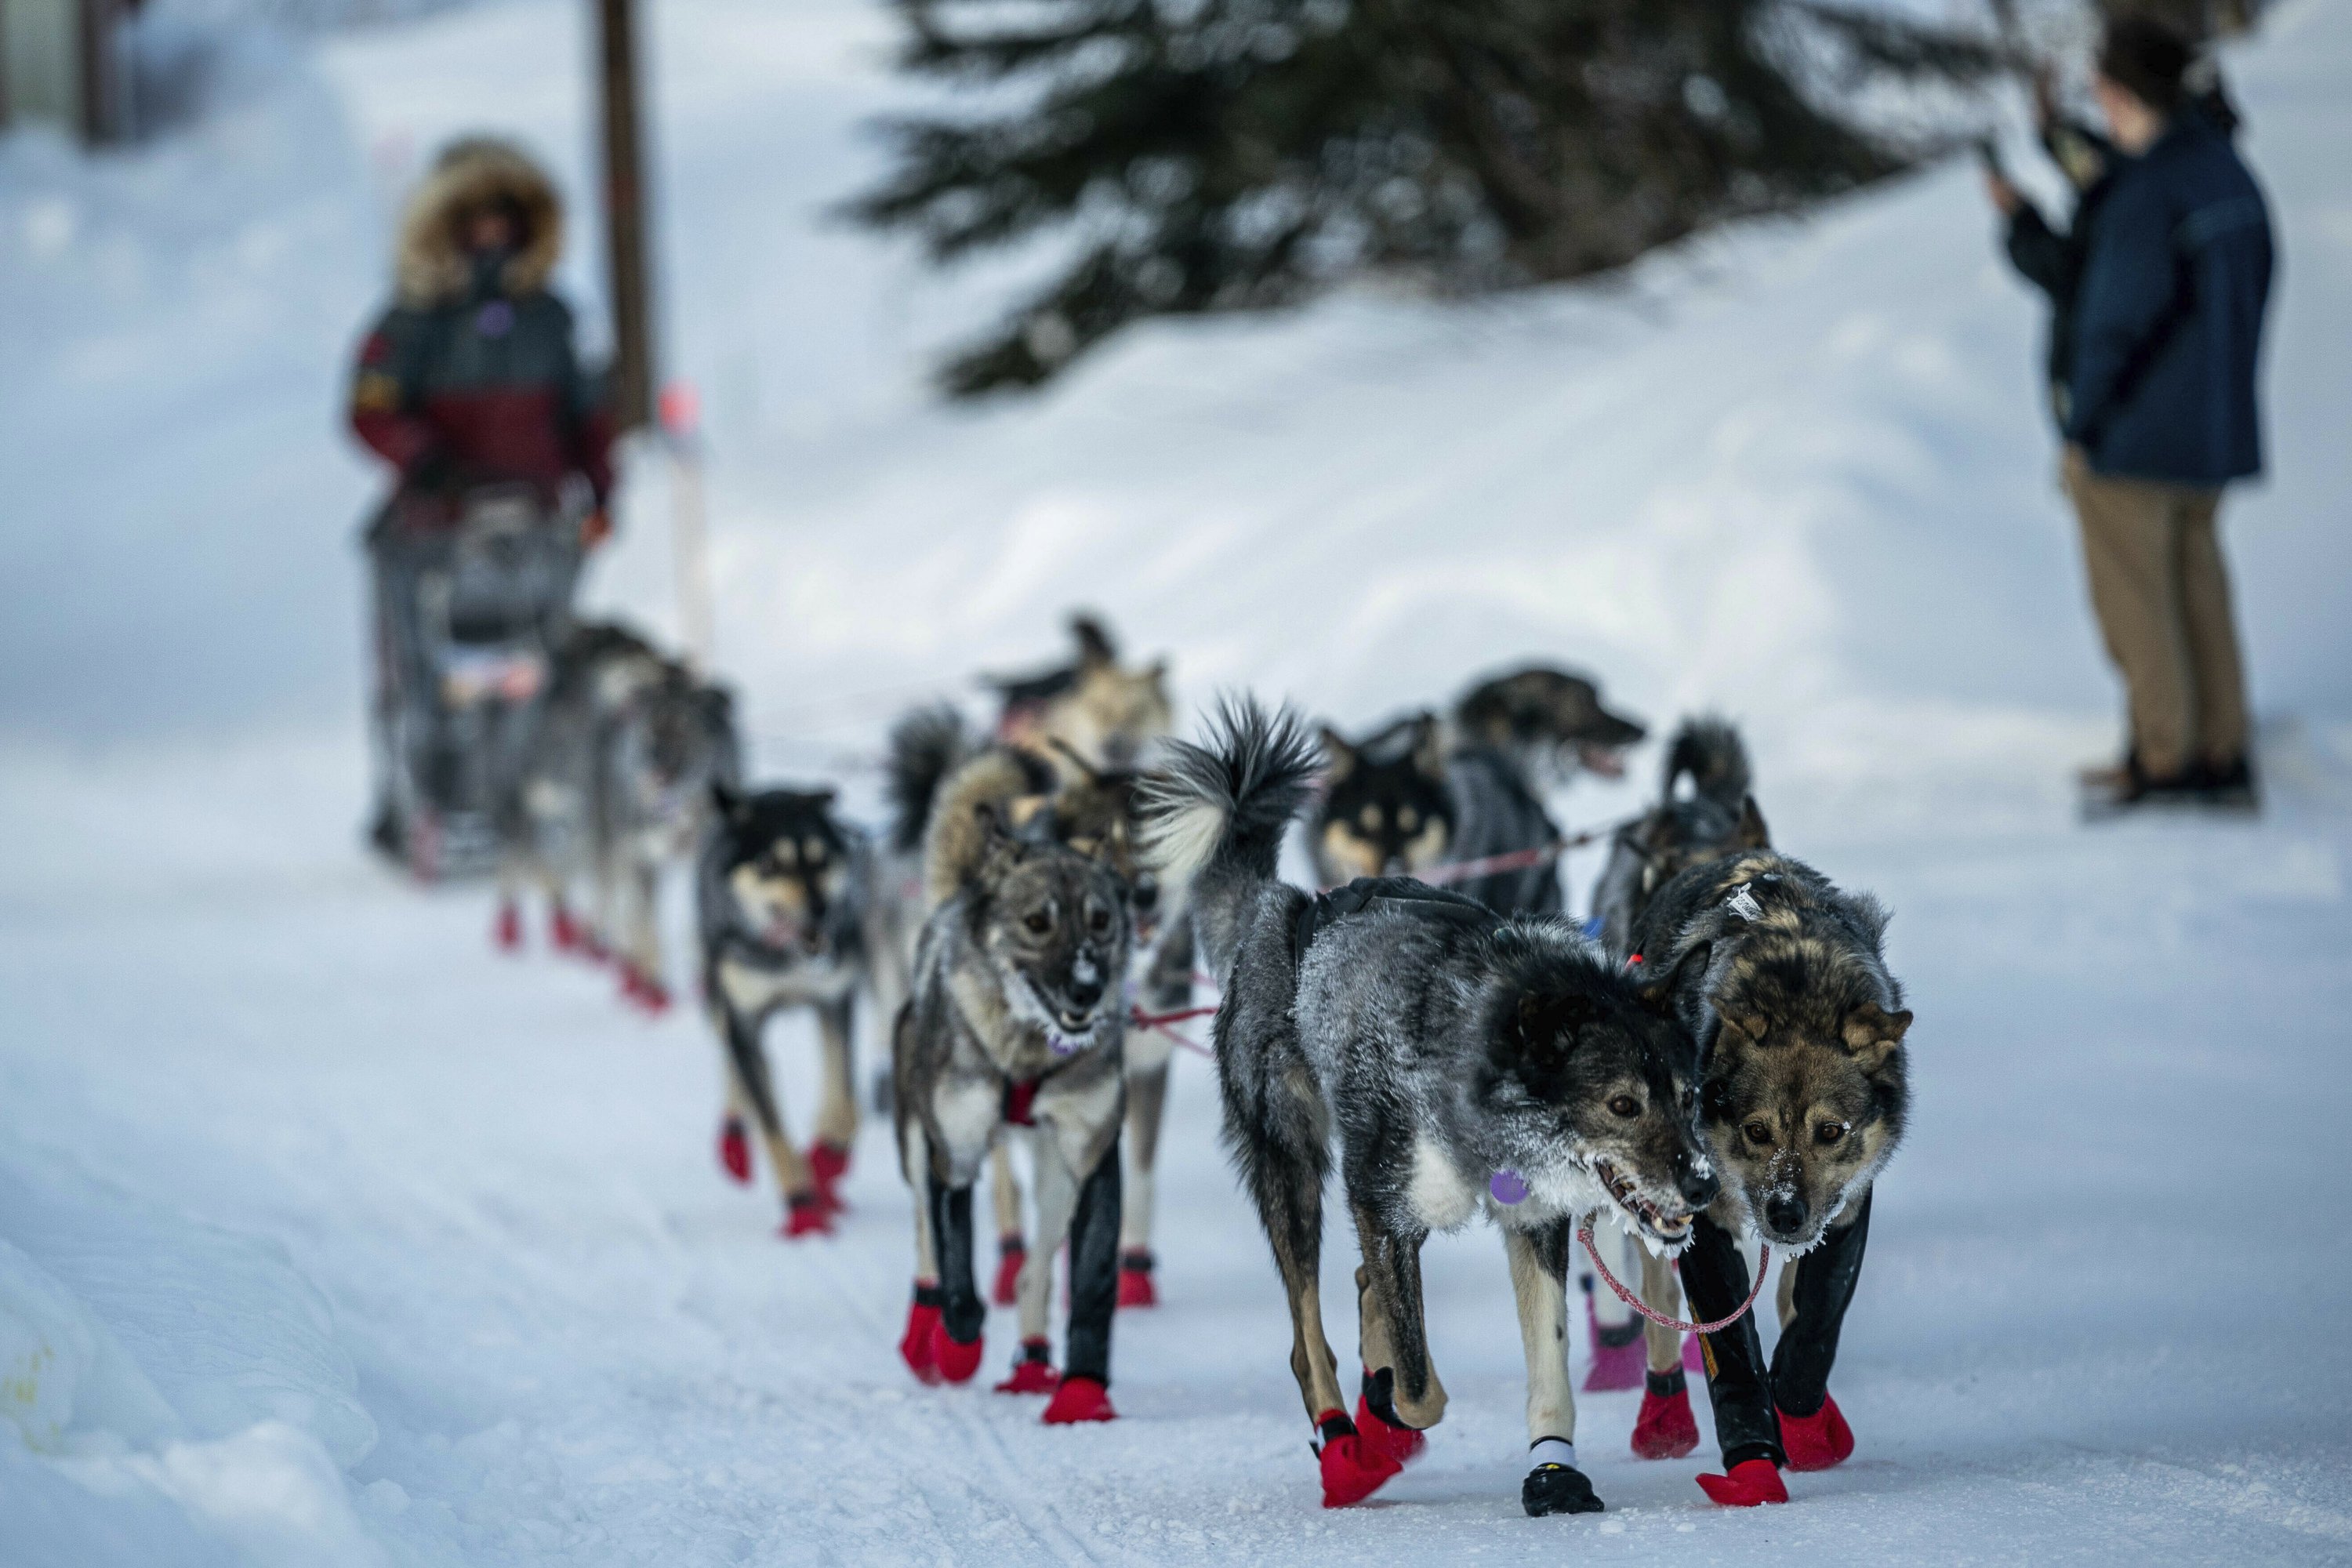 Norwegian musher takes lead in Iditarod as finish nears AP News